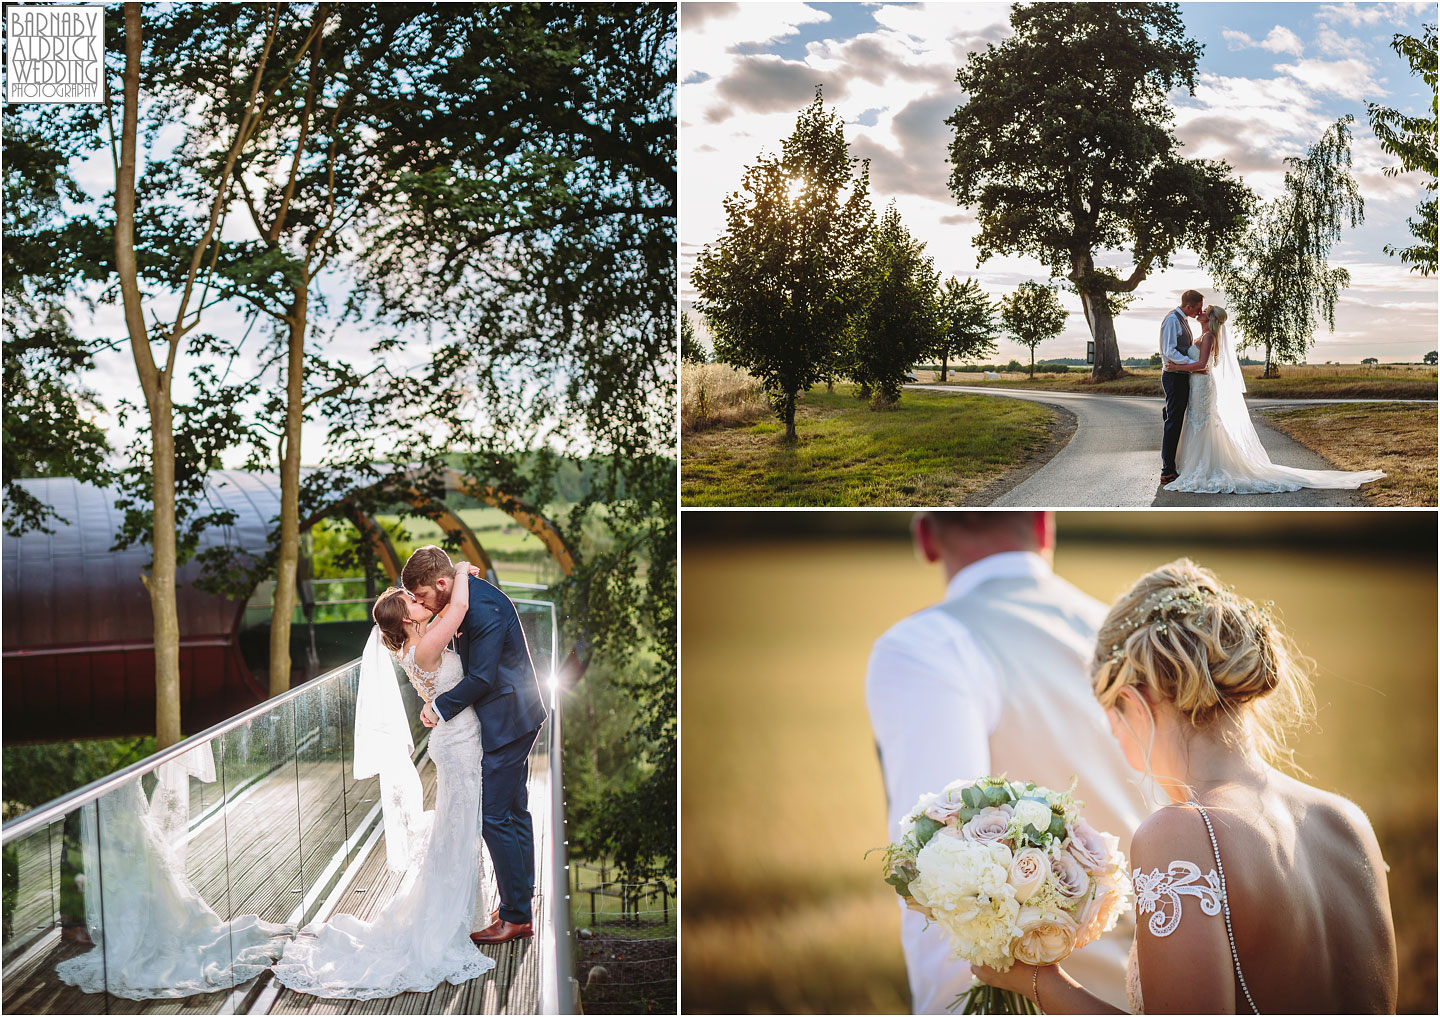 Wedding couple photos at Priory Cottages near Wetherby, Amazing Yorkshire Wedding Photos, Best Yorkshire Wedding Photos 2018